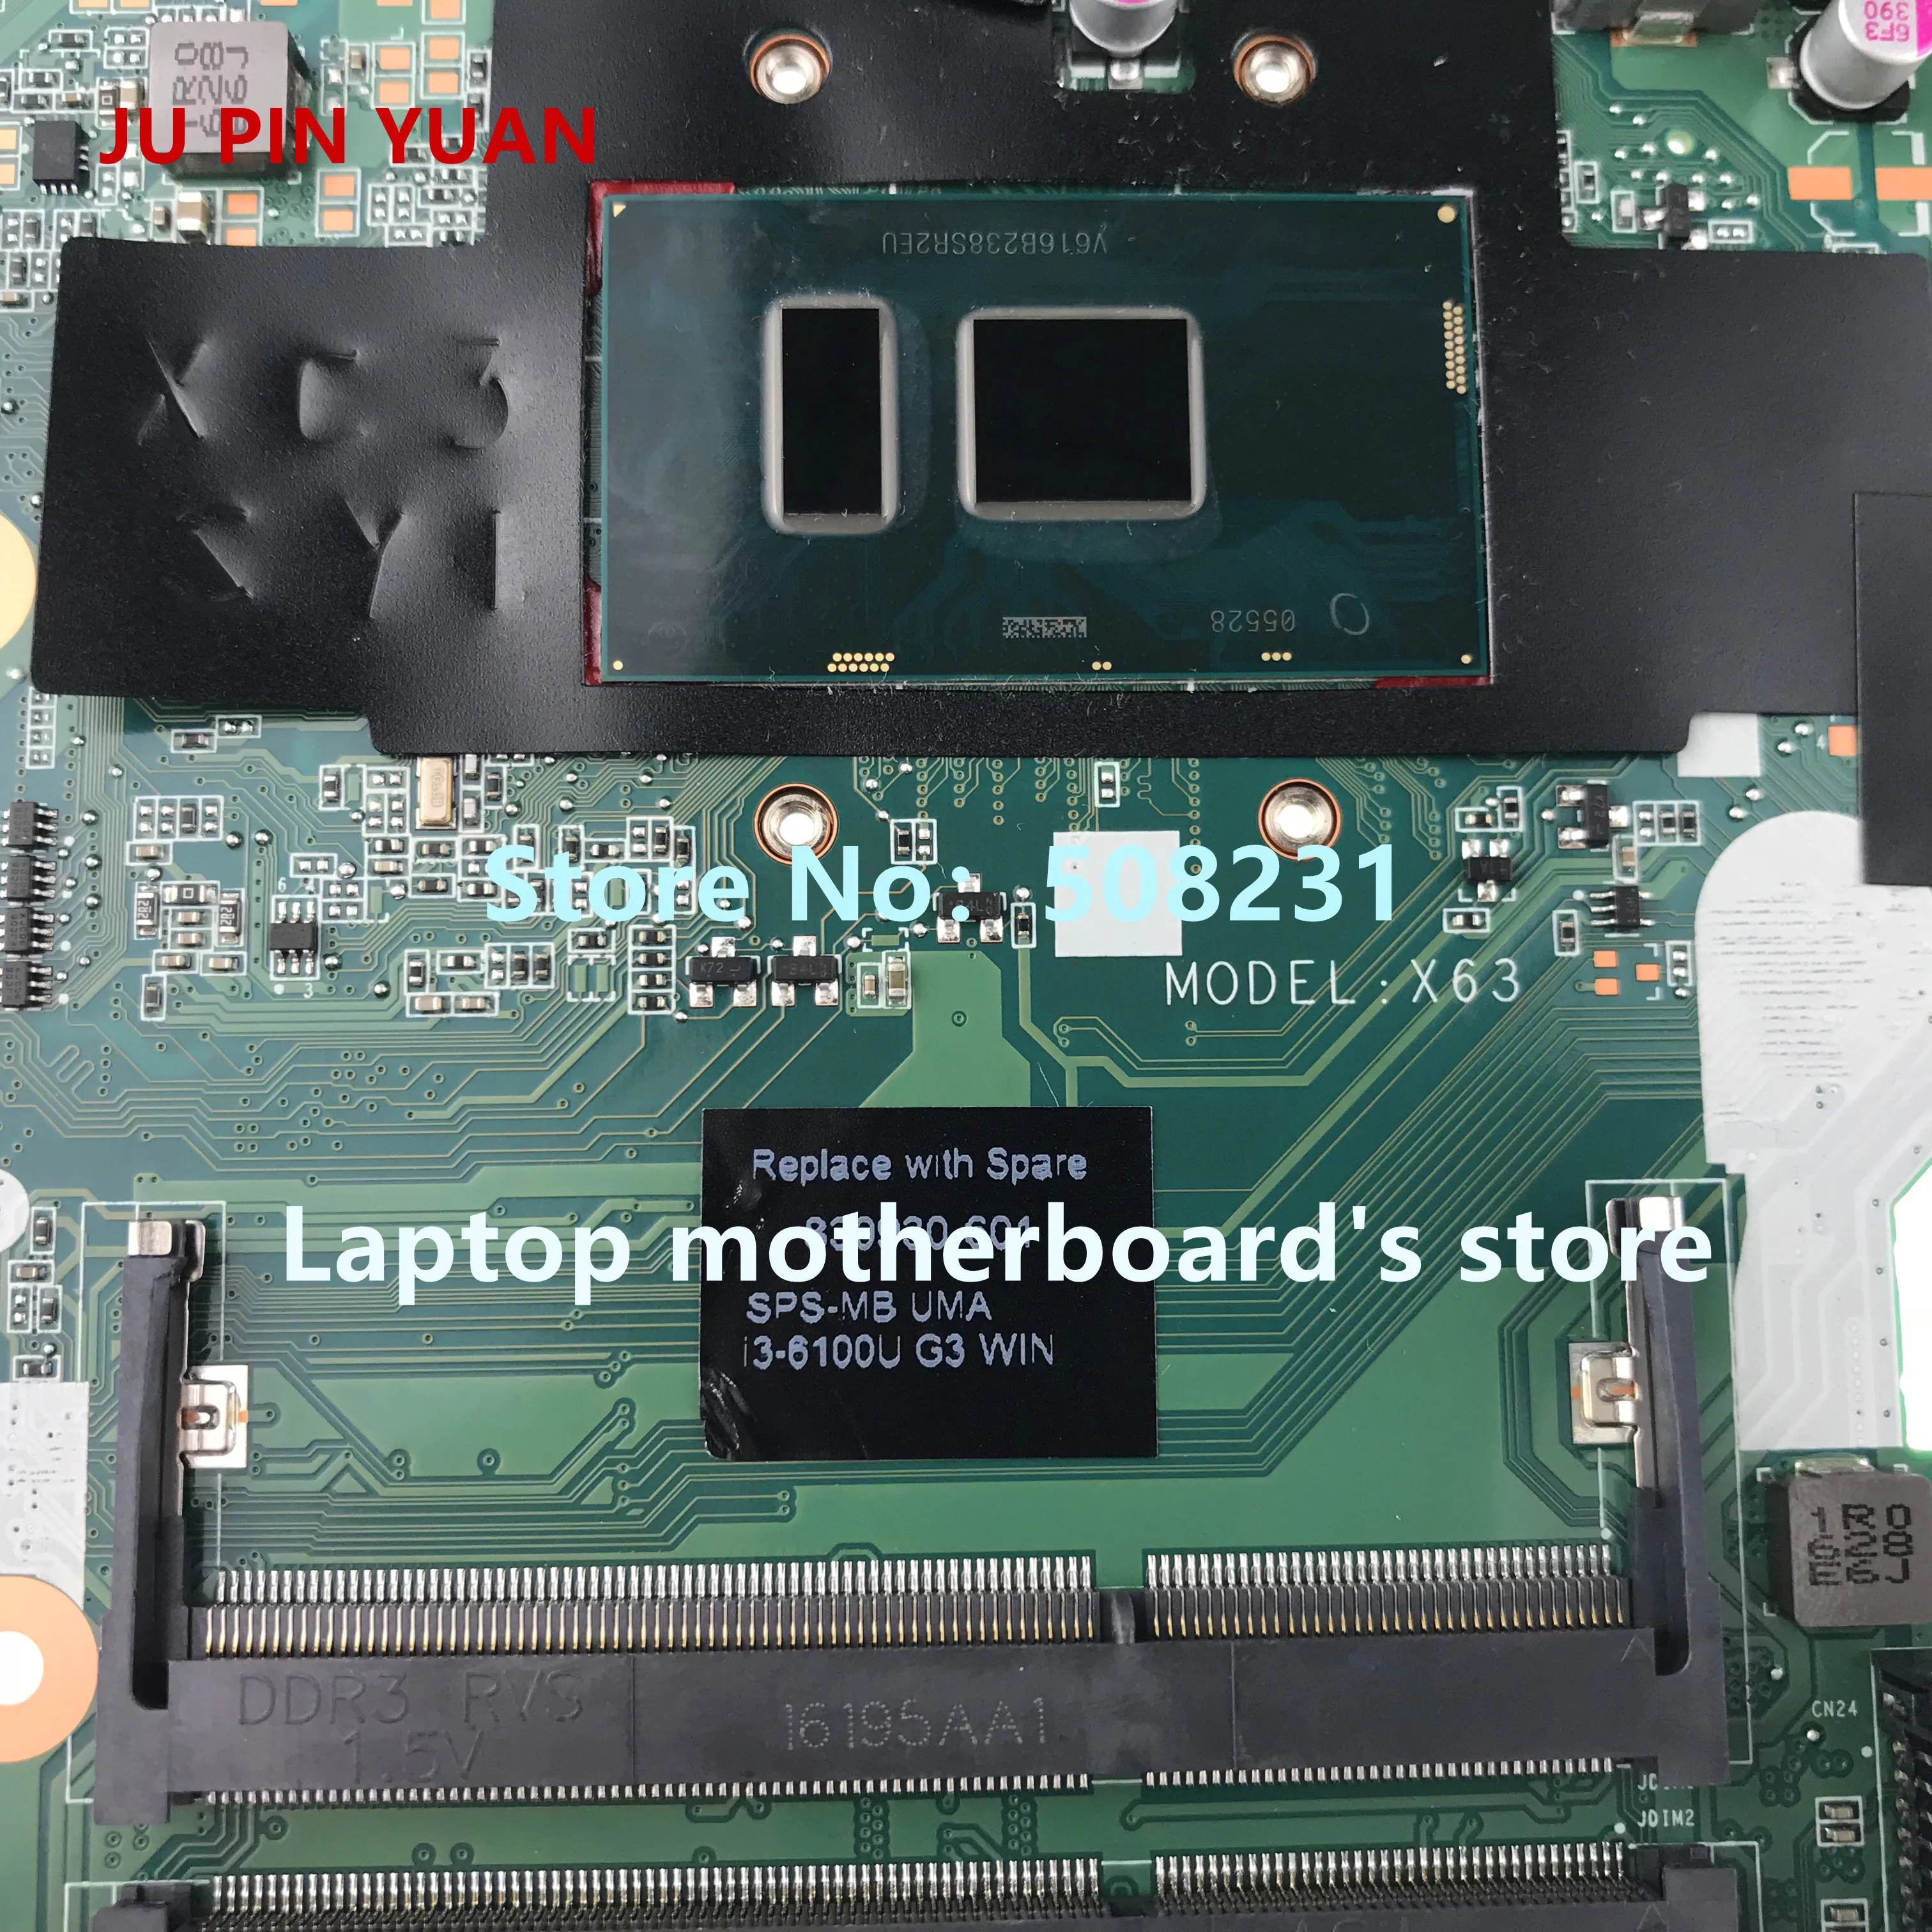 Ju pin yuan L01042-001 L01042-601 DA0X8BMB6F0 материнская плата для ноутбука hp ProBook 440 G5 430 G5 Тетрадь ПК I7-8550U полностью протестирована